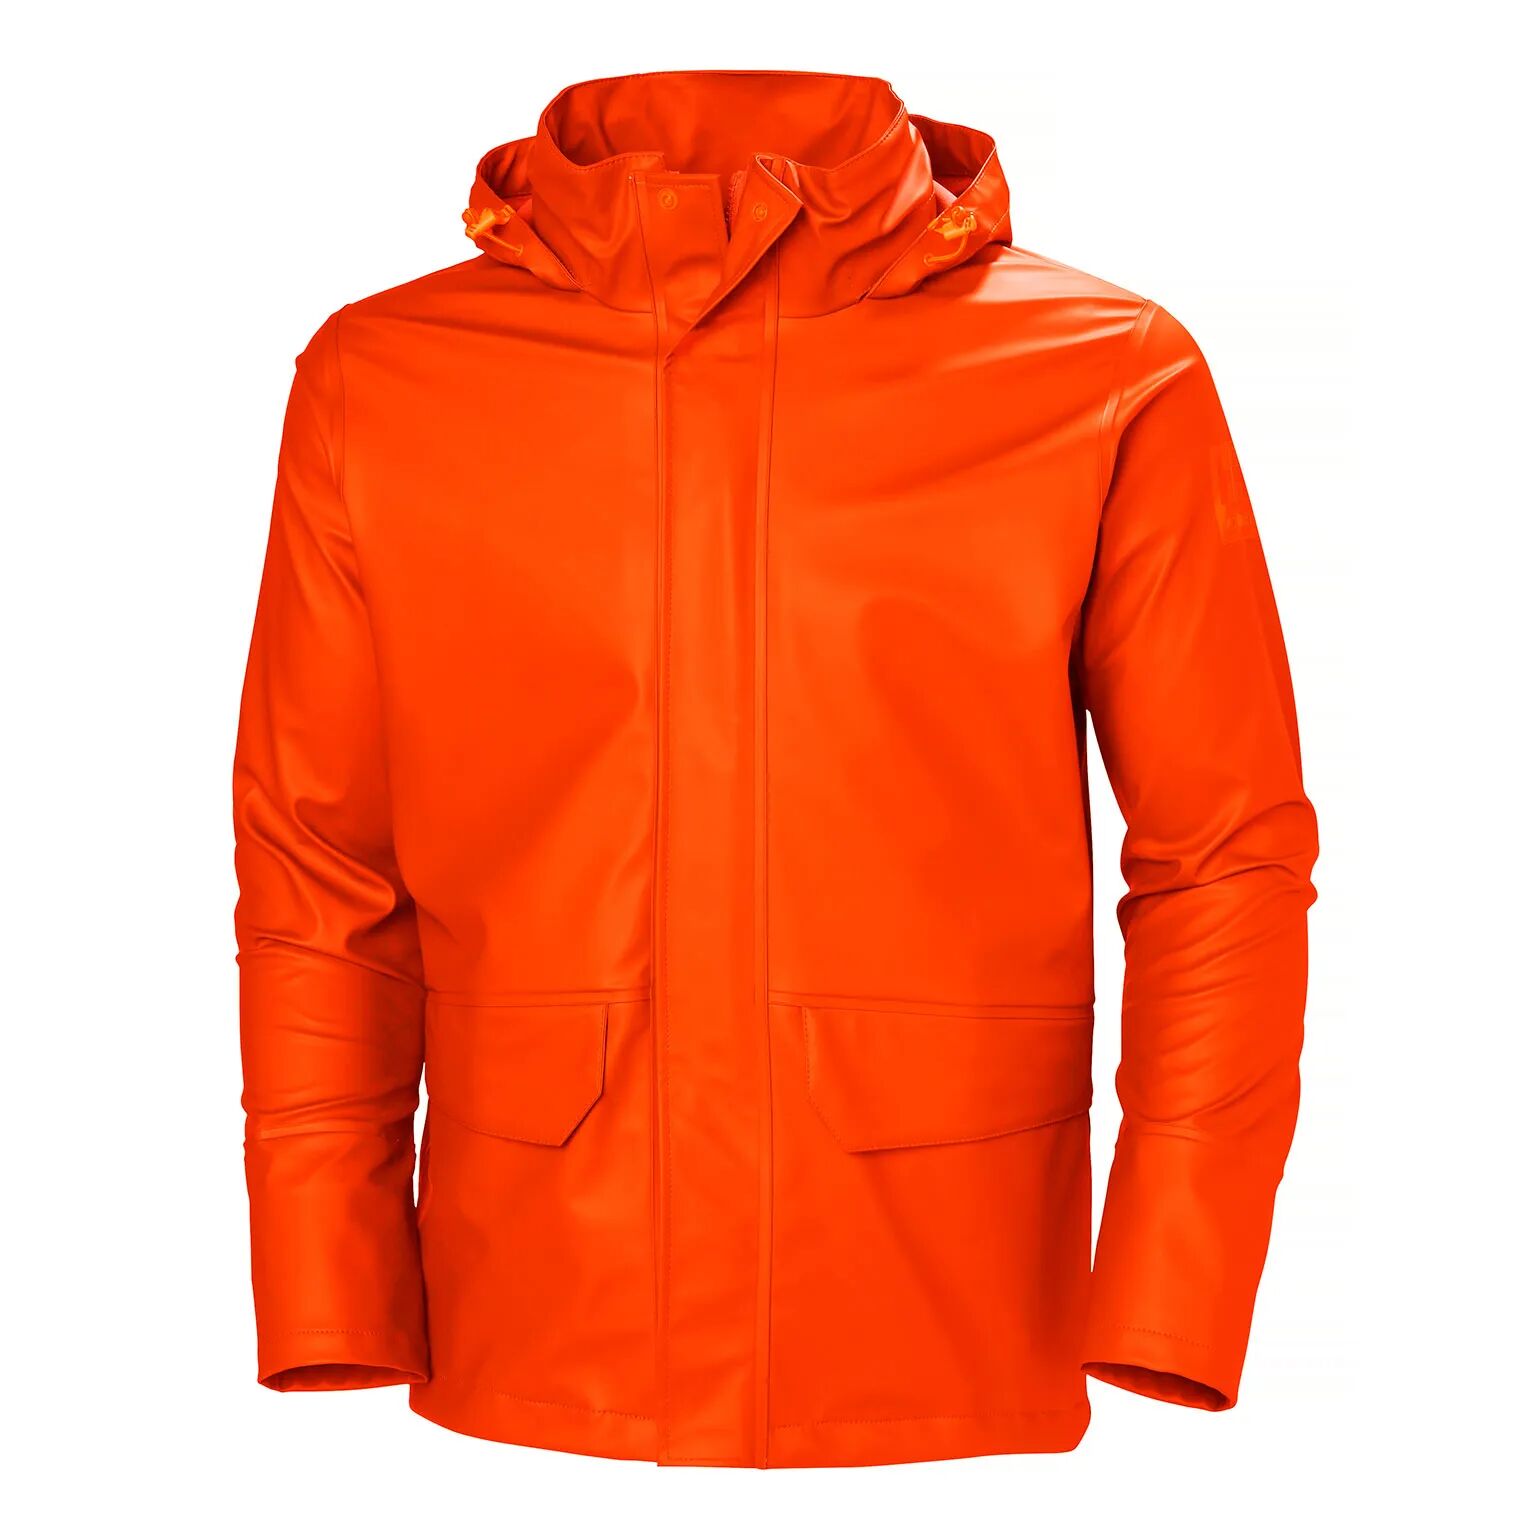 HH Workwear Helly Hansen WorkwearGale Phthalate-Free Waterproof Rain Jacket Orange XL